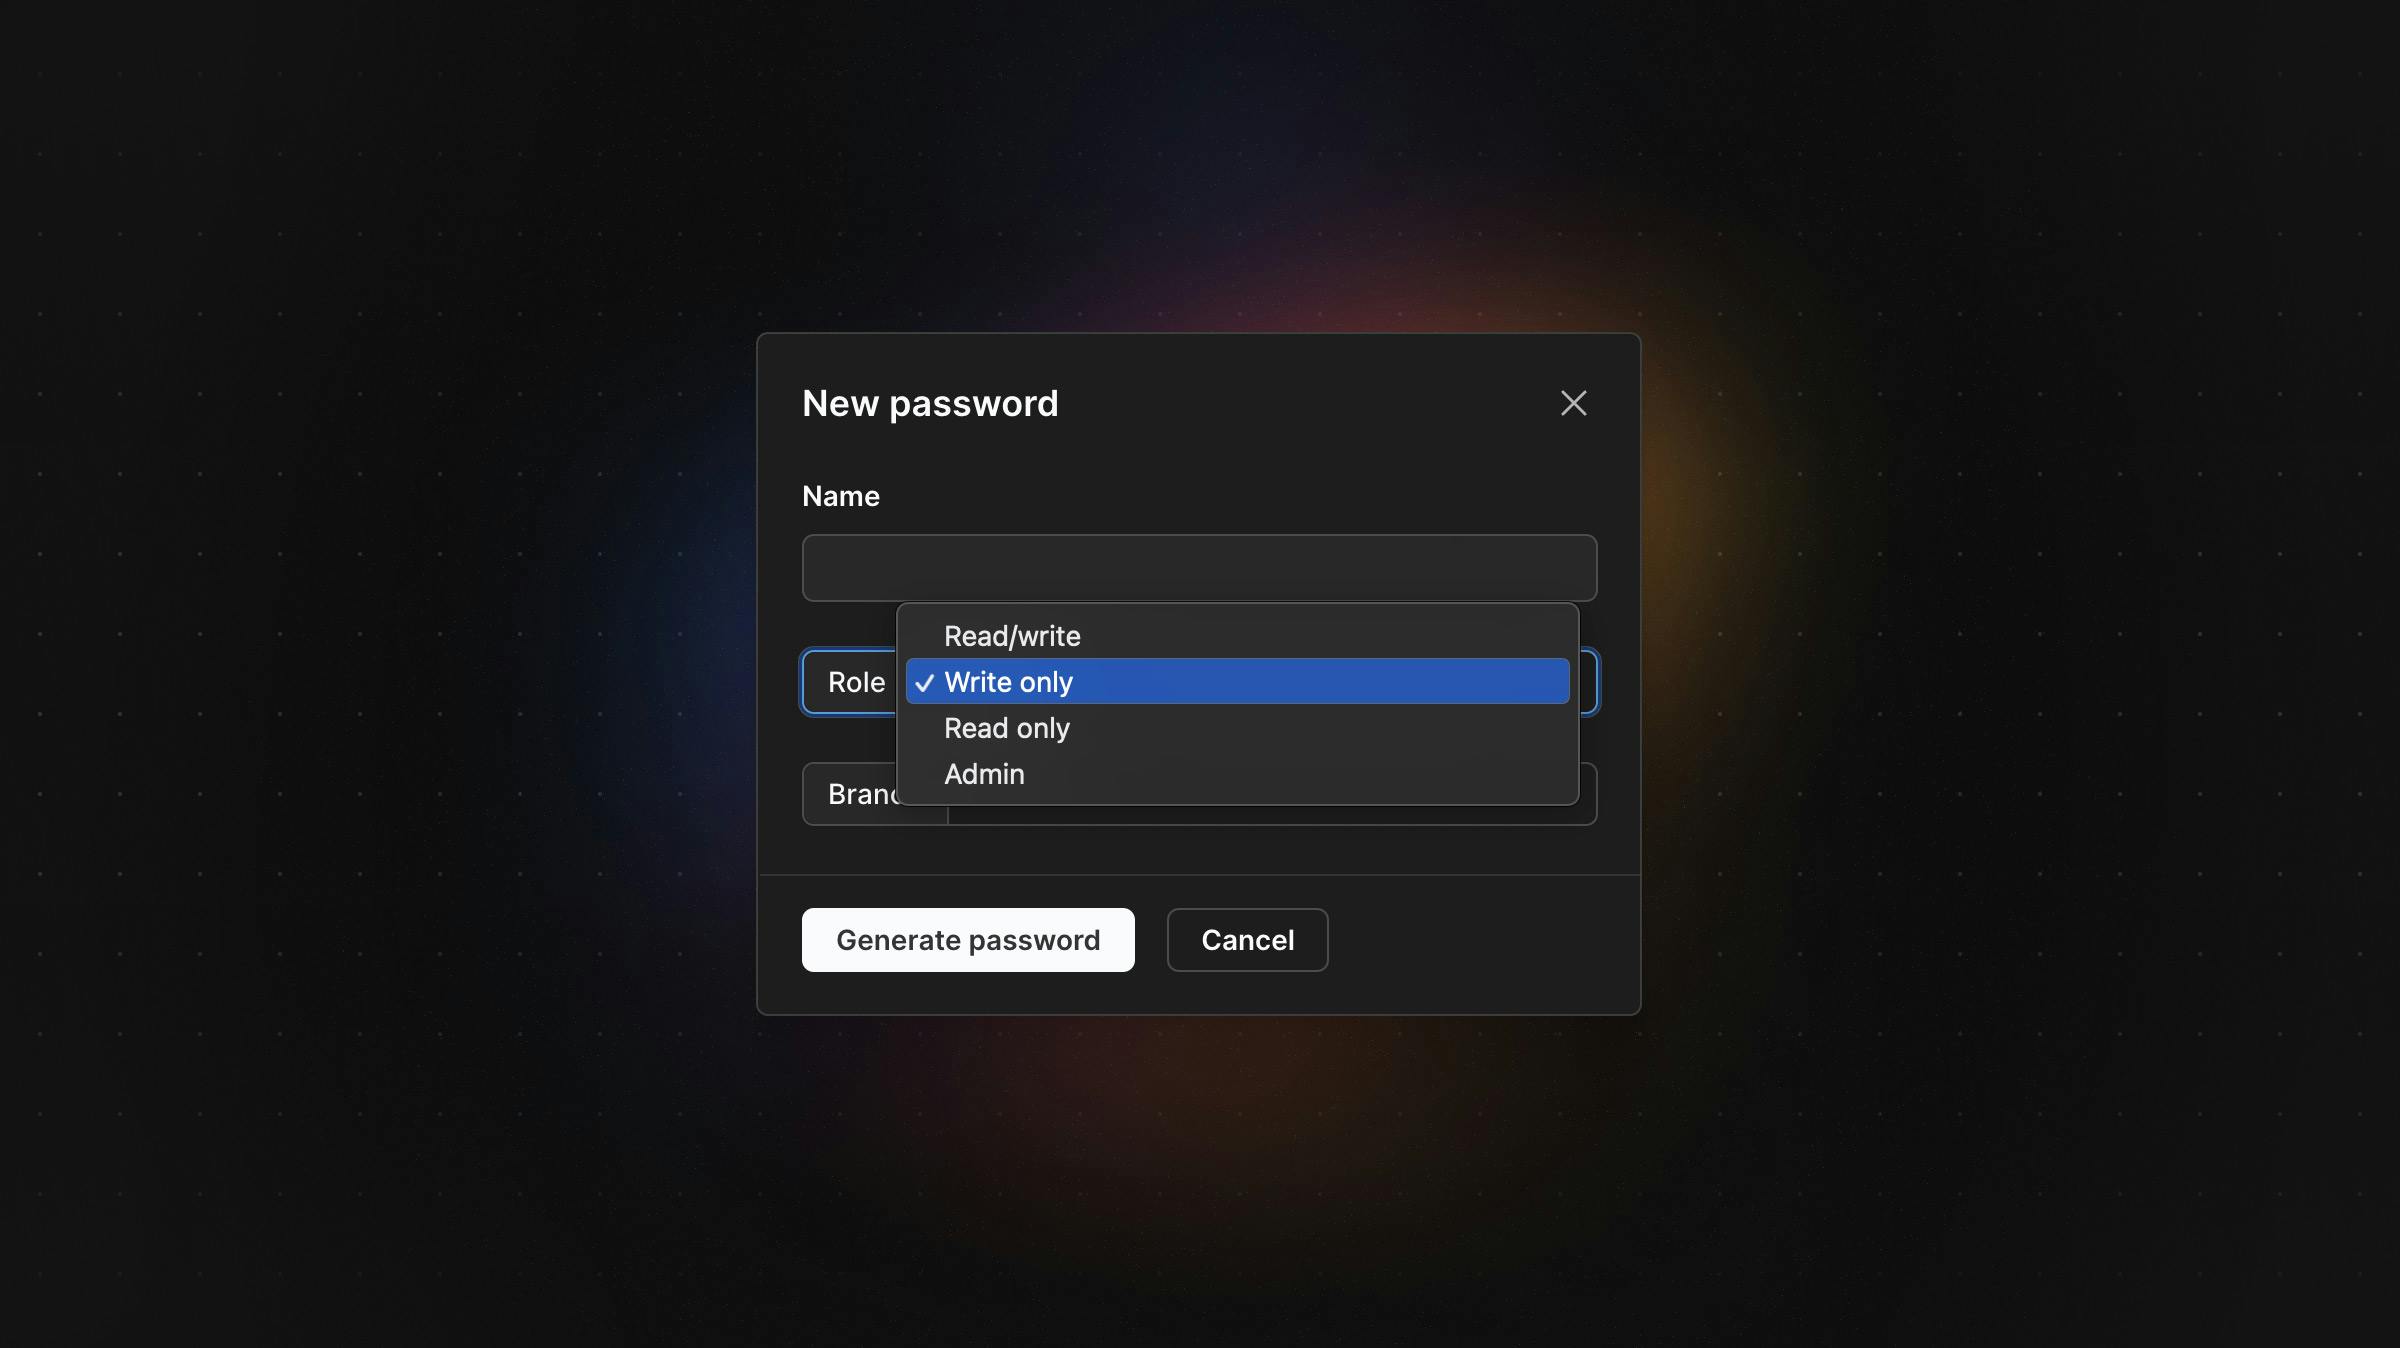 Password roles